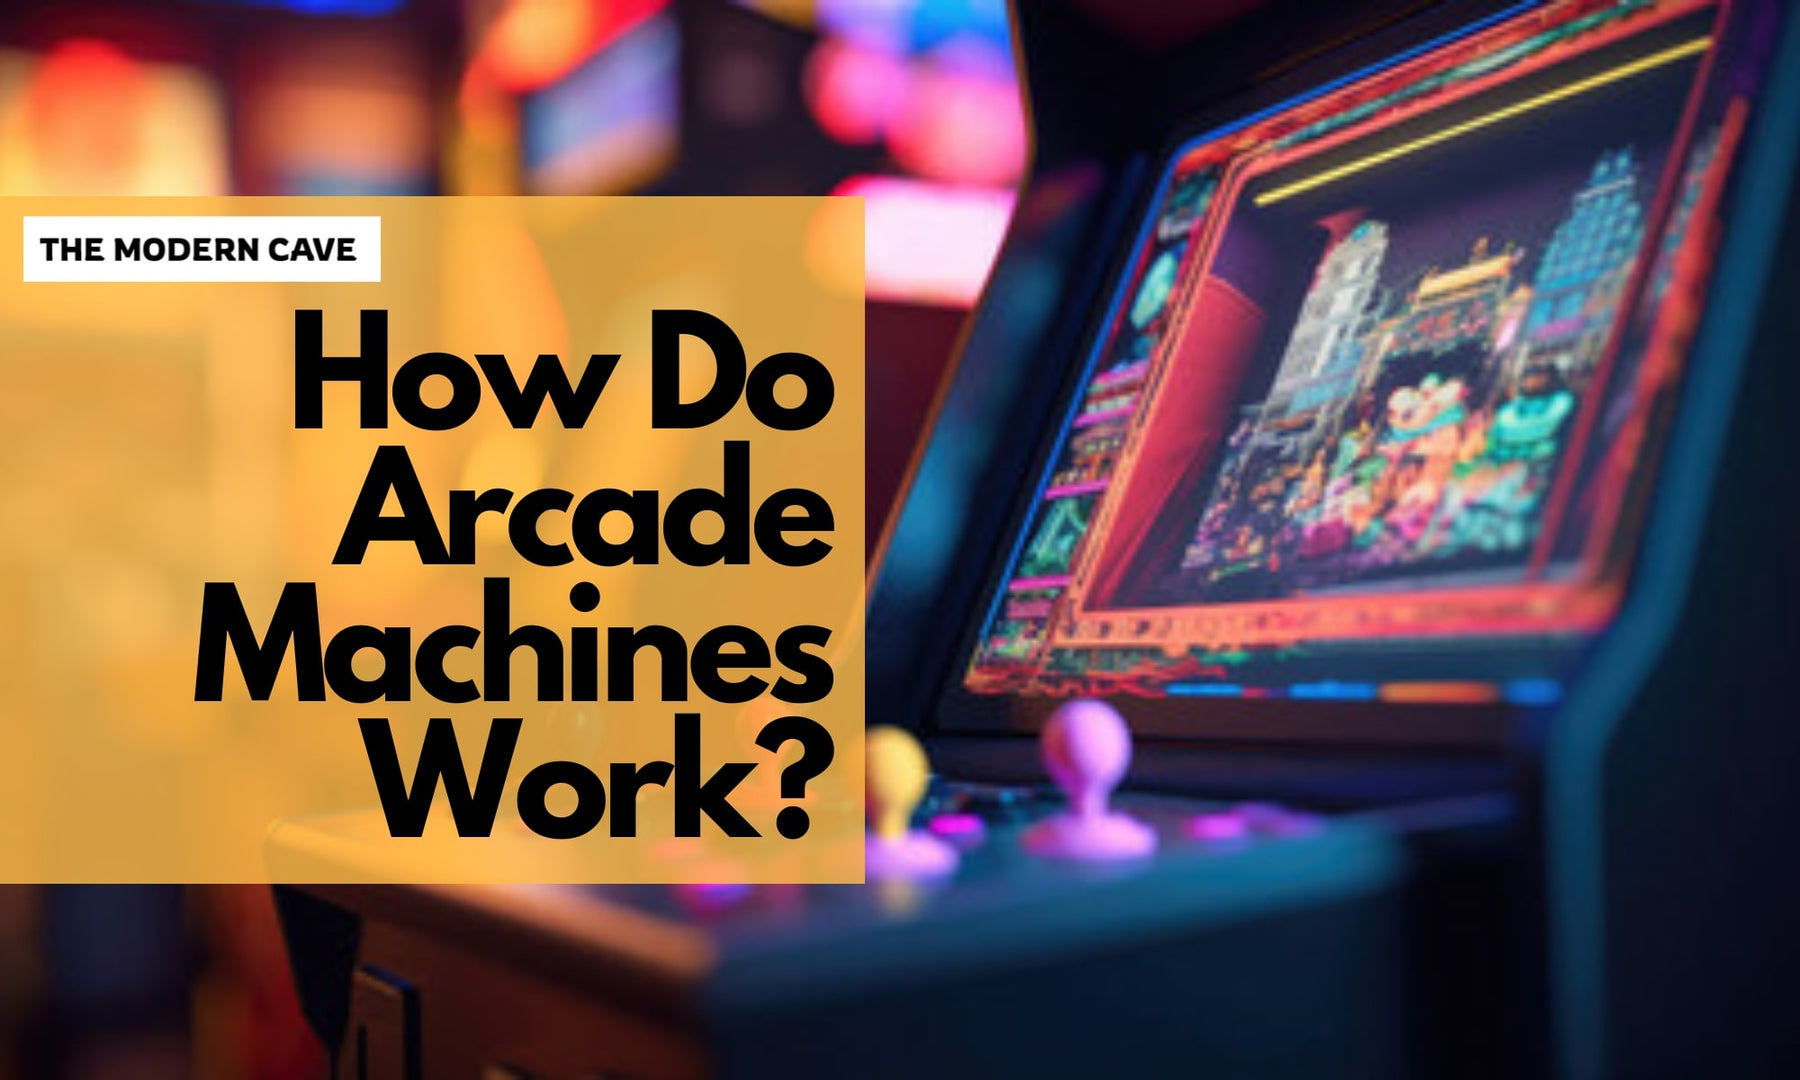 How Do Arcade Machines Work?